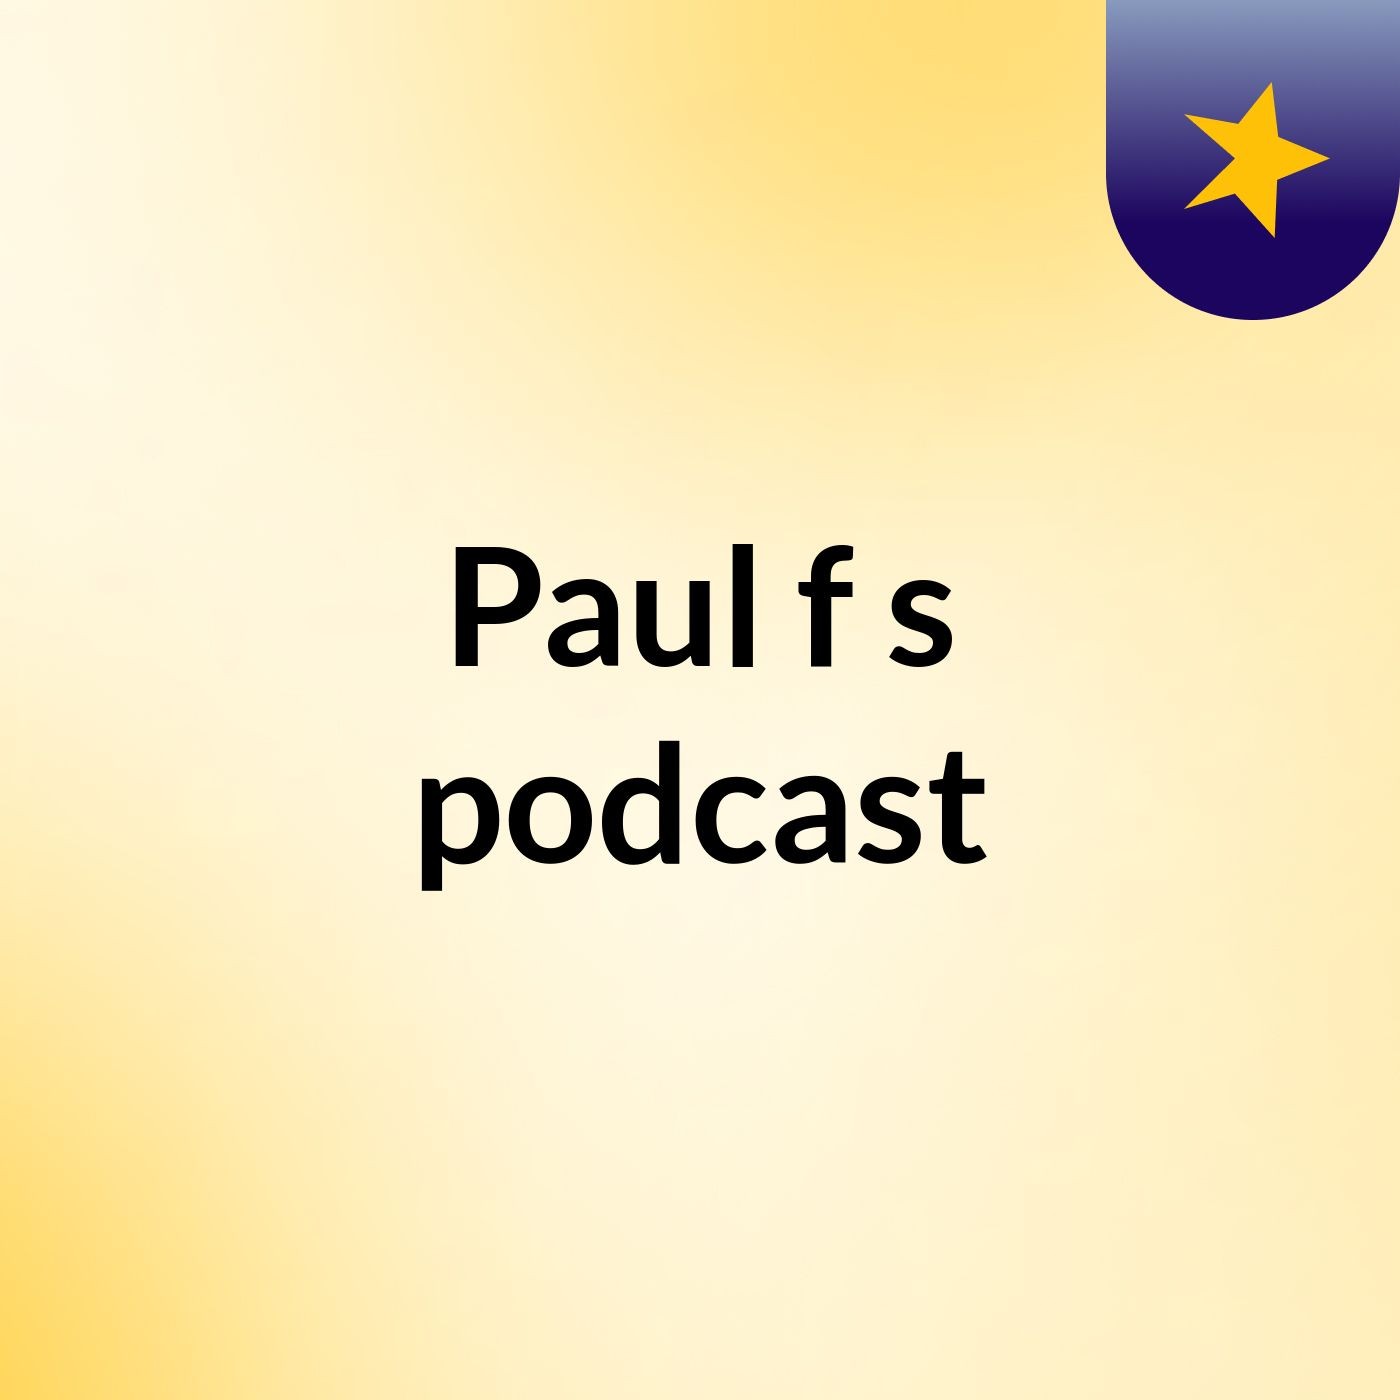 Paul f's podcast